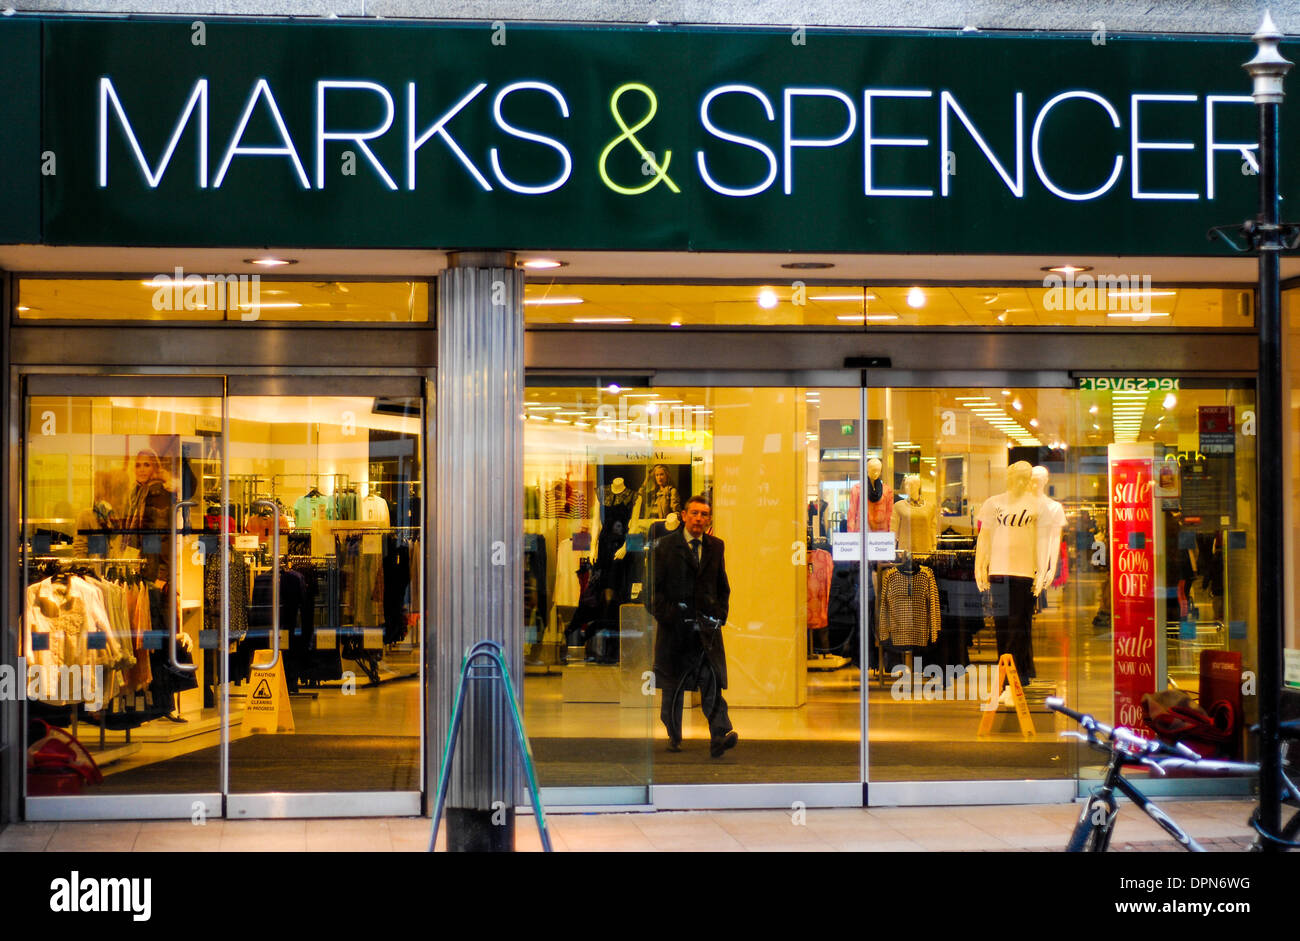 Marks & Spencer shop front Northampton Stock Photo: 65619948 - Alamy